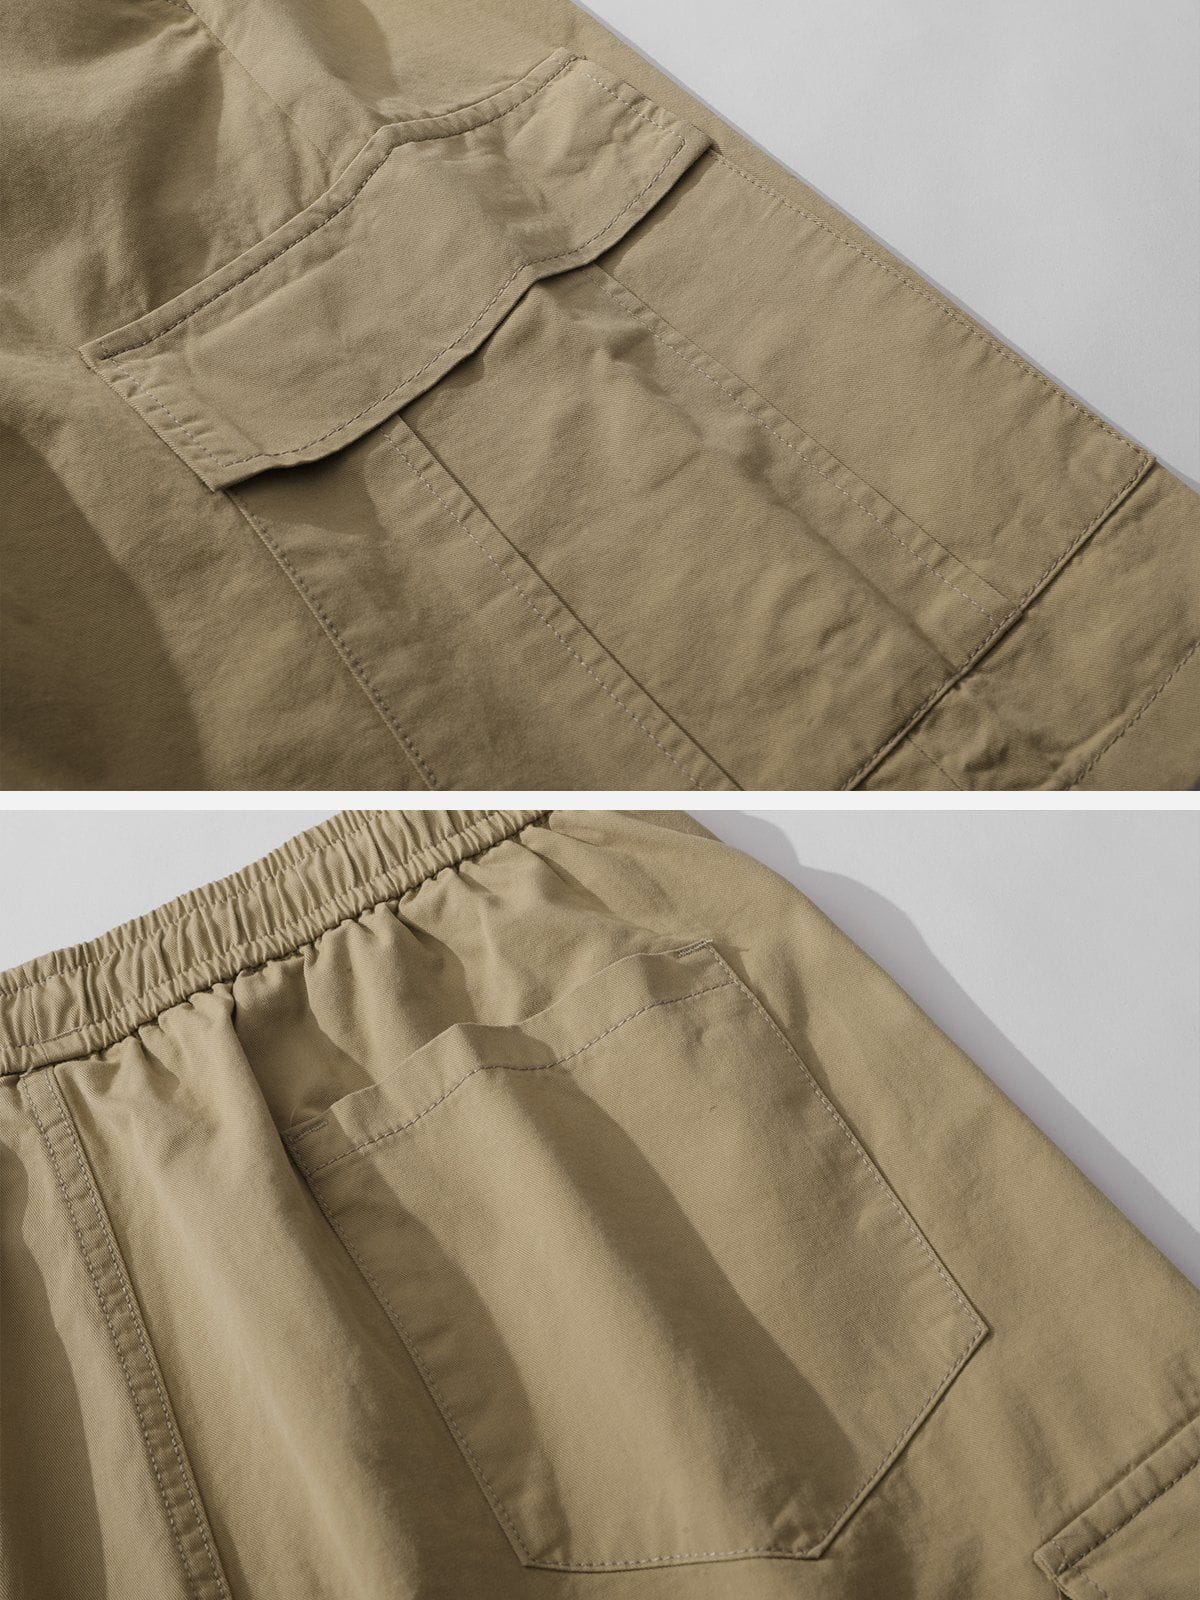 Majesda® - Solid Discreet Side Pockets Shorts outfit ideas streetwear fashion